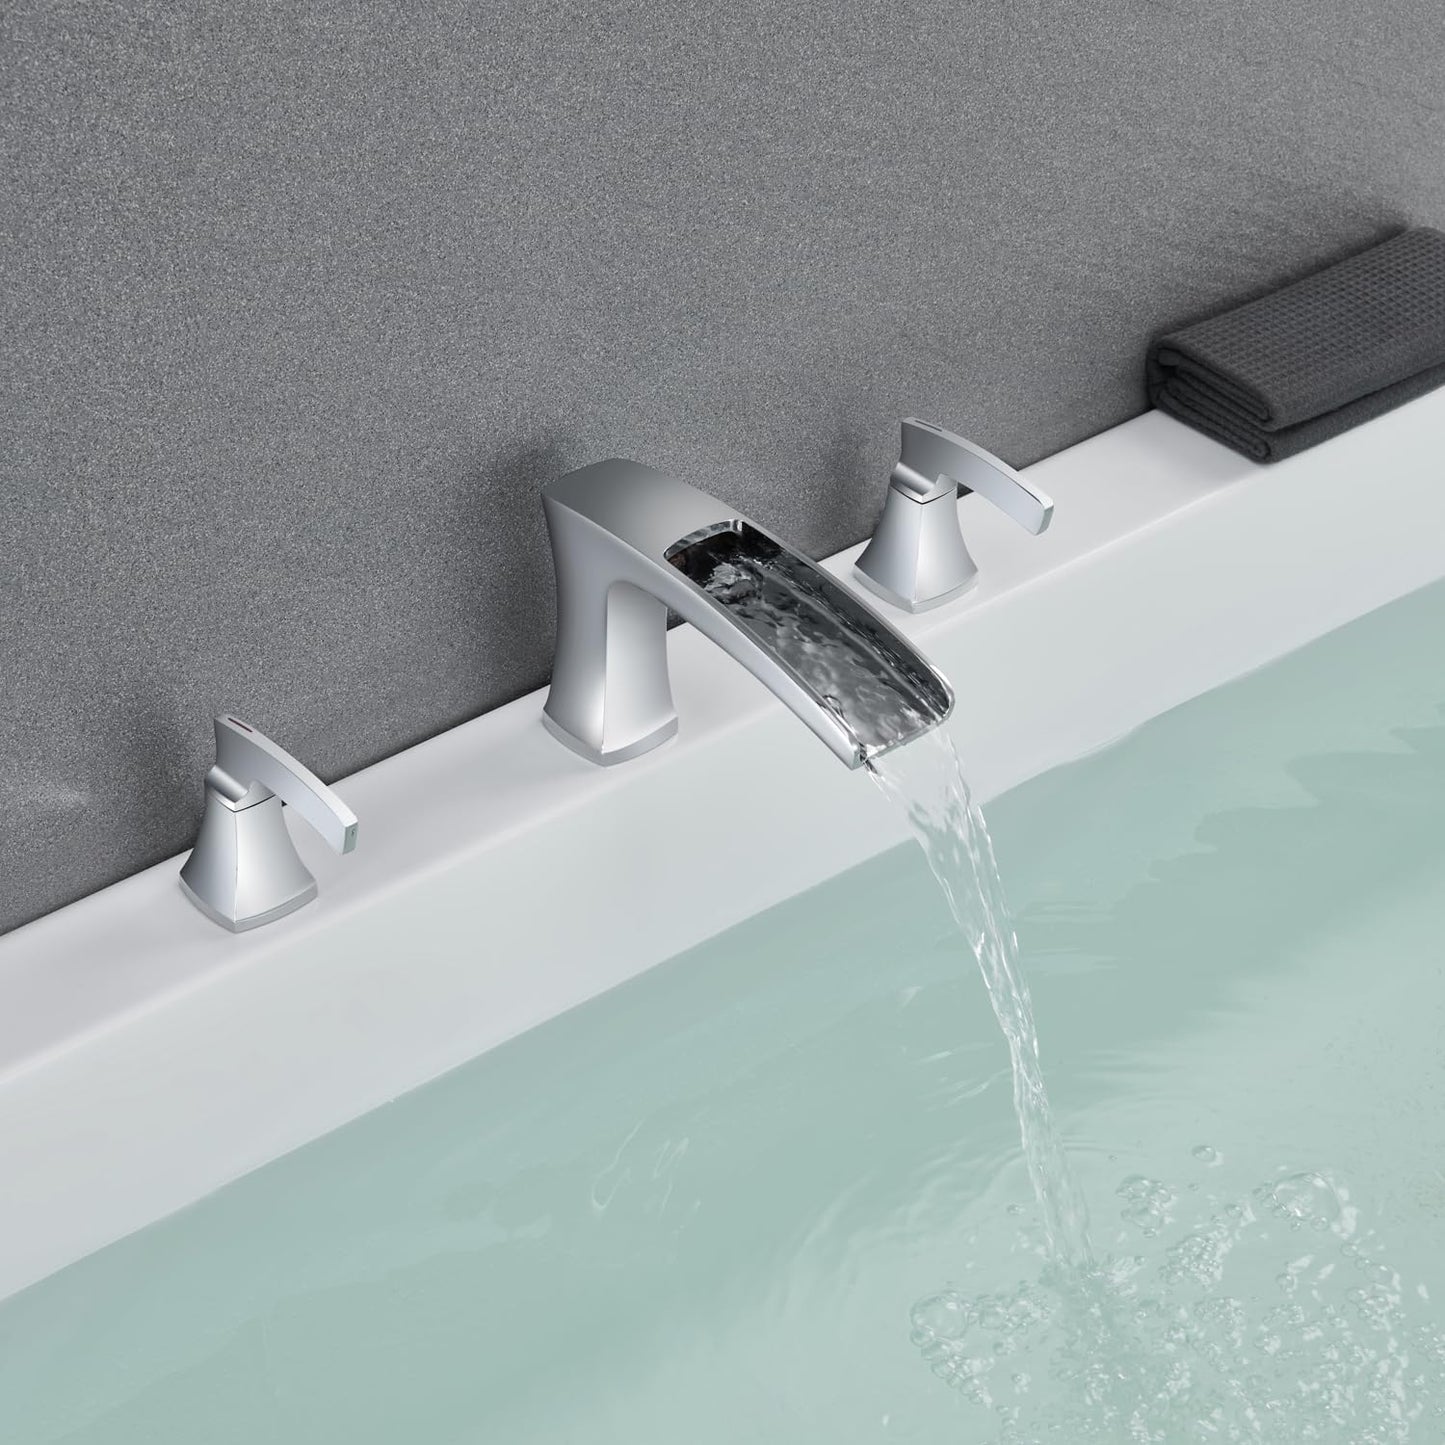 Artiqua Tub Faucet Roman Waterfall Tub Filler Chrome Deck Mount Bathtub Faucets 3 Hole Brass Bathroom Faucets with 2 Handles (Chrome)